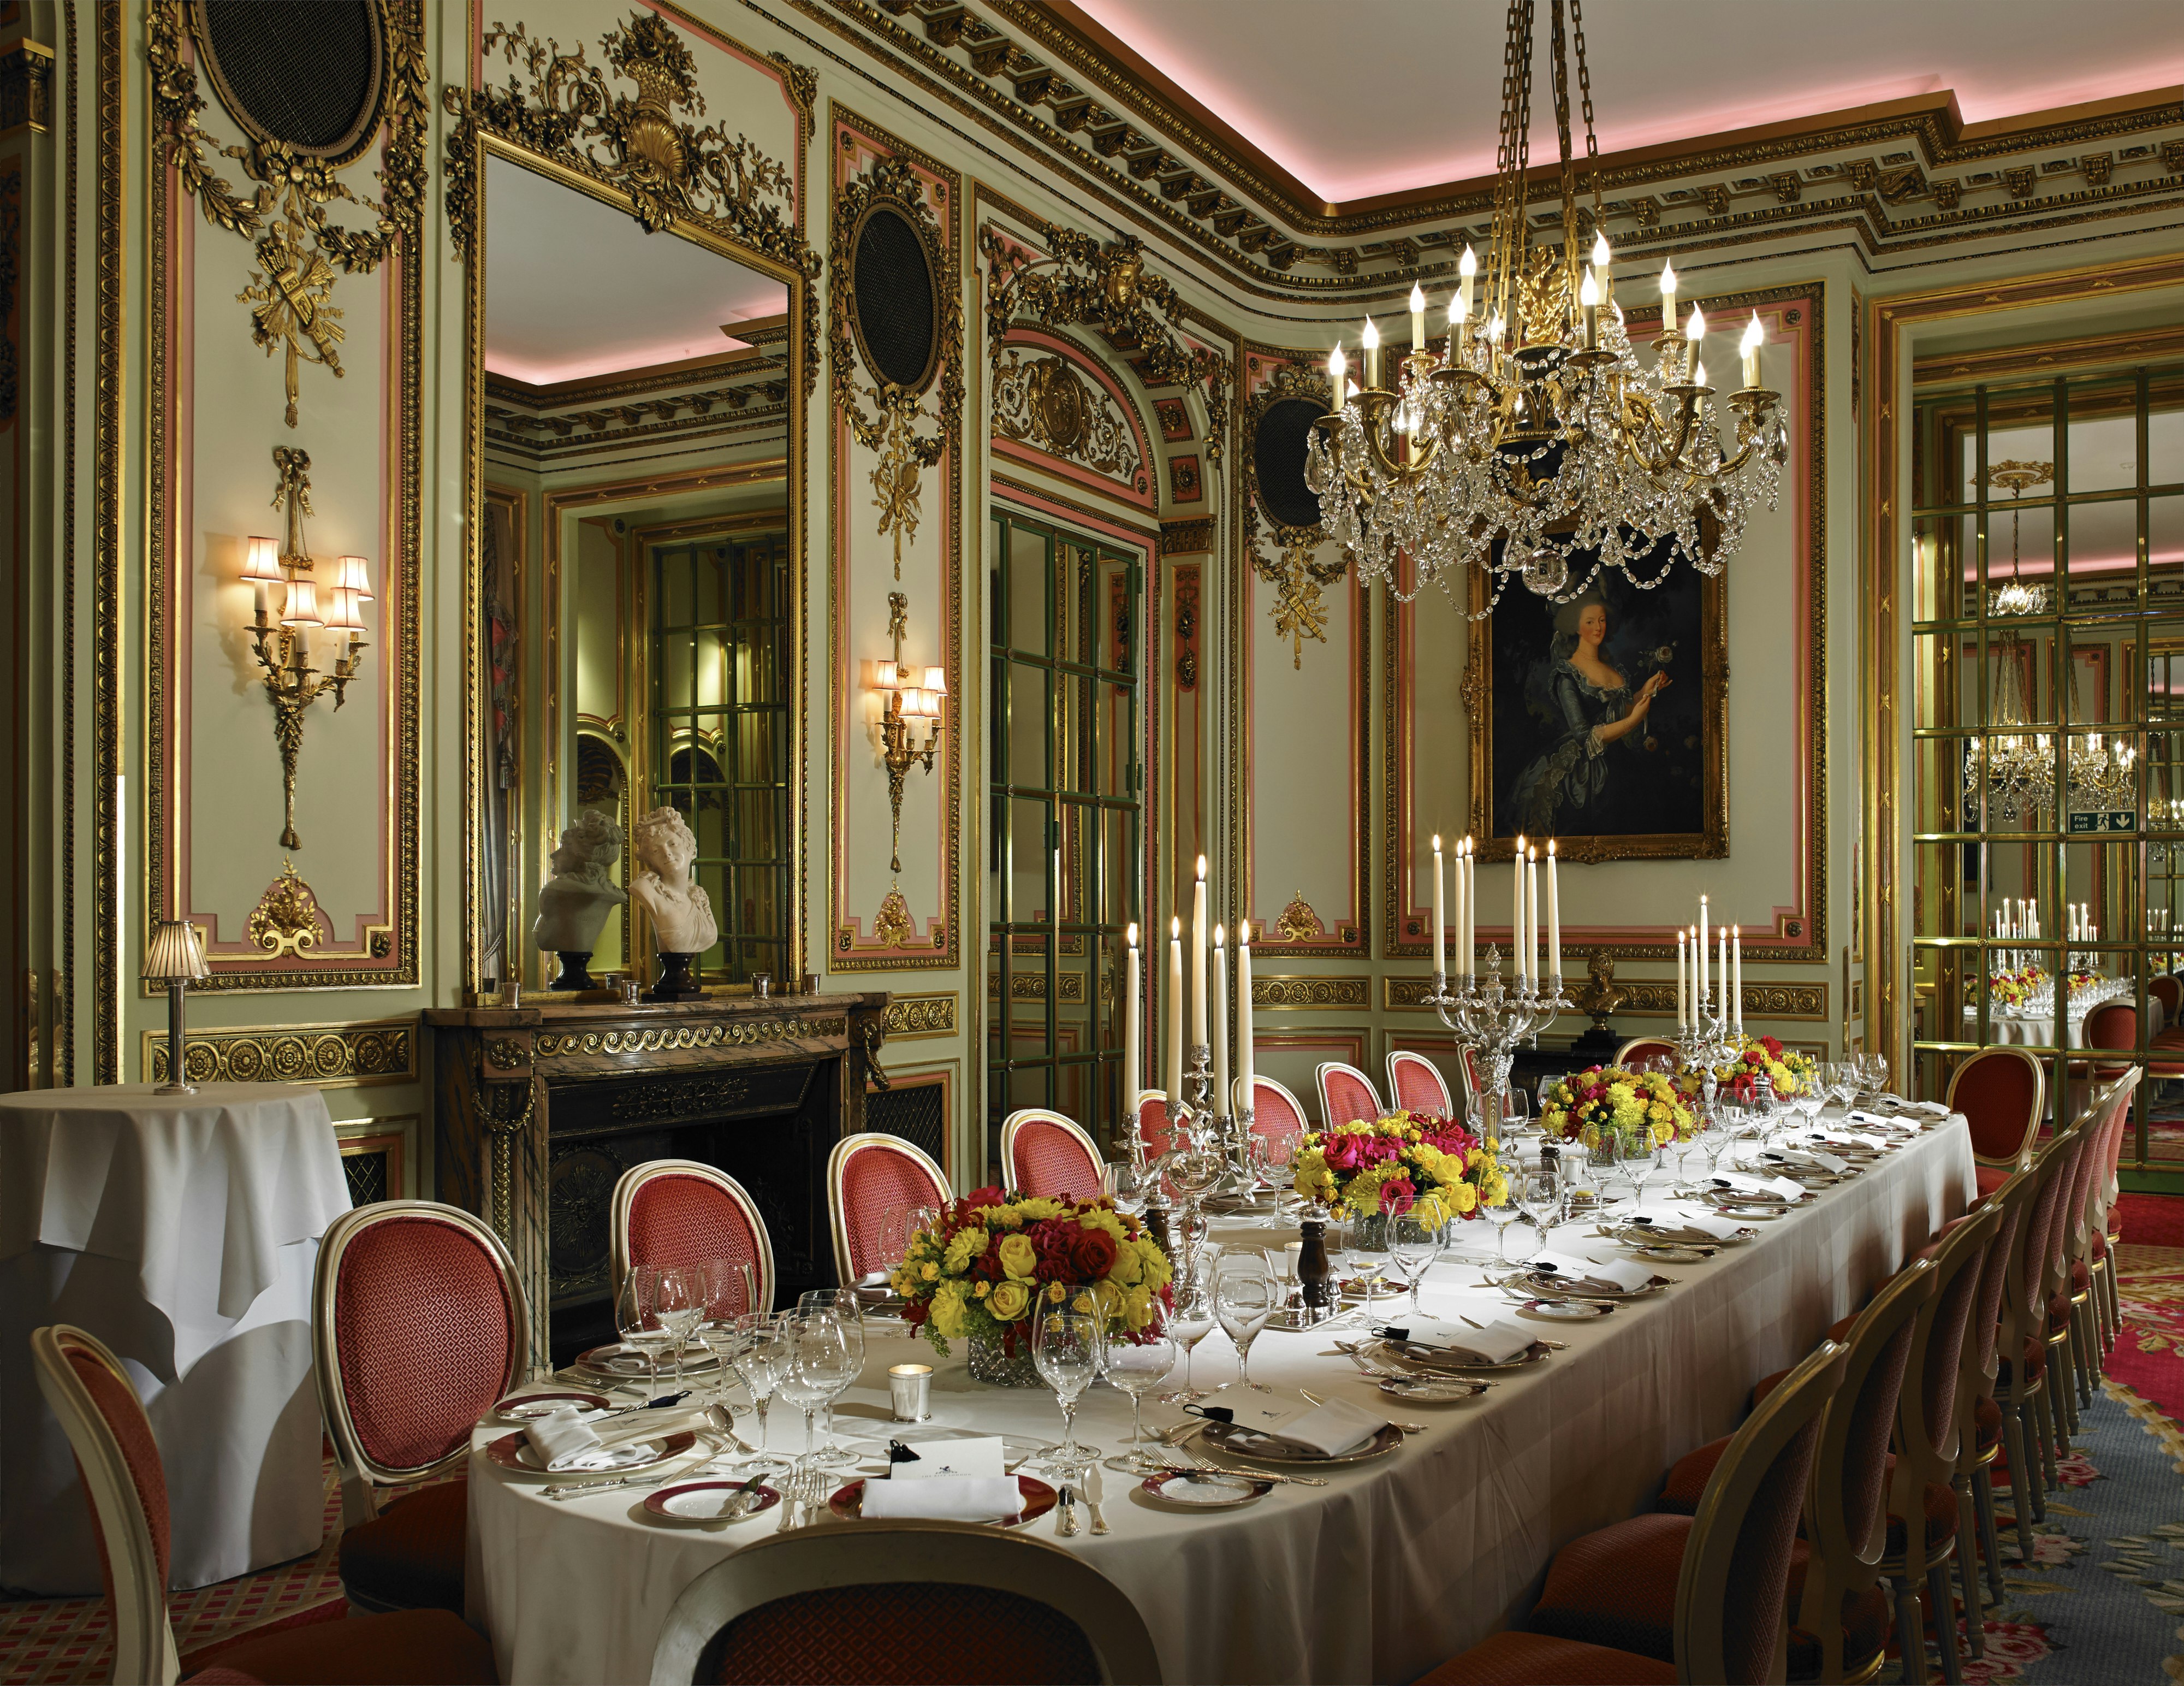 The Ritz London - The Marie Antoinette Suite image 1